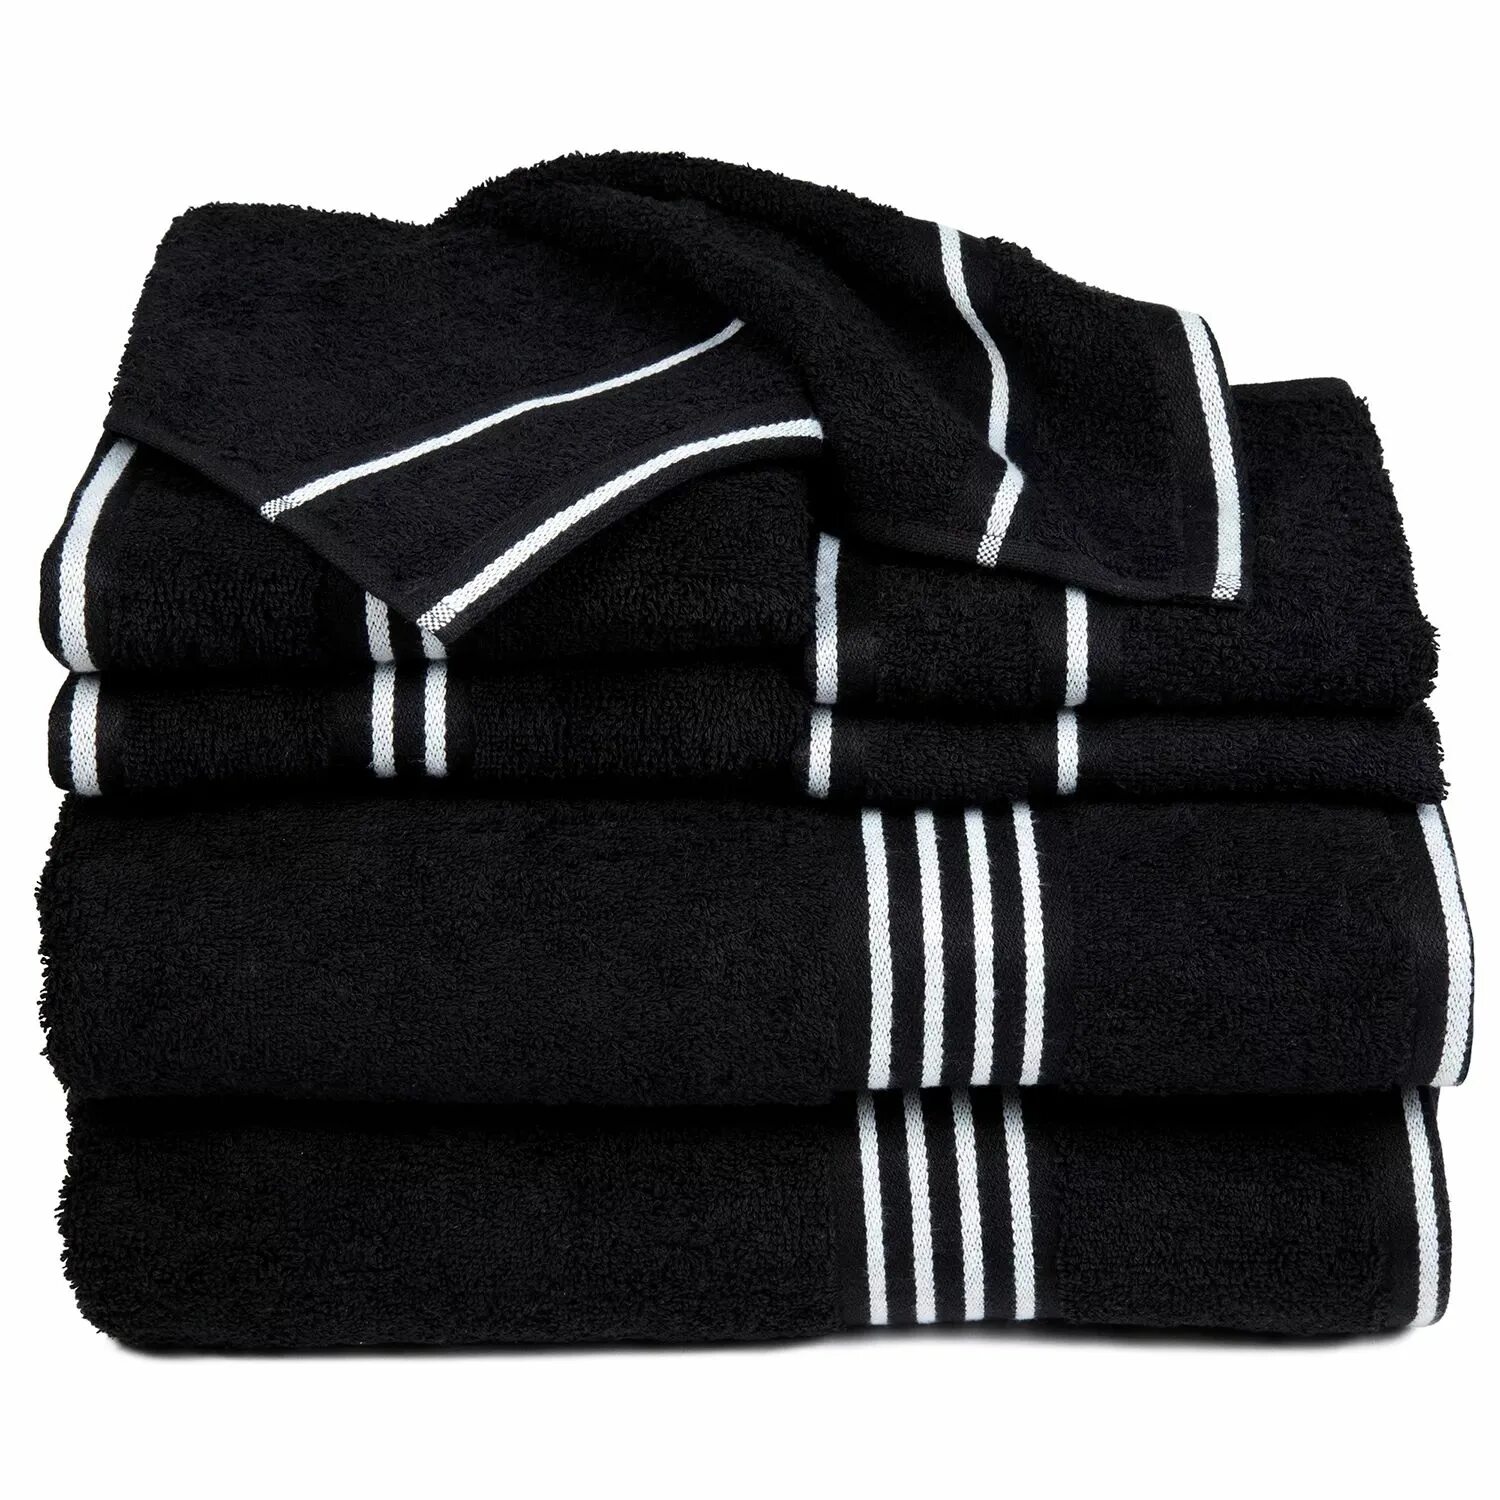 Черное полотенце. Набор черных полотенец. Темные полотенца. Полотенца черного цвета. Черные полотенца для ванной